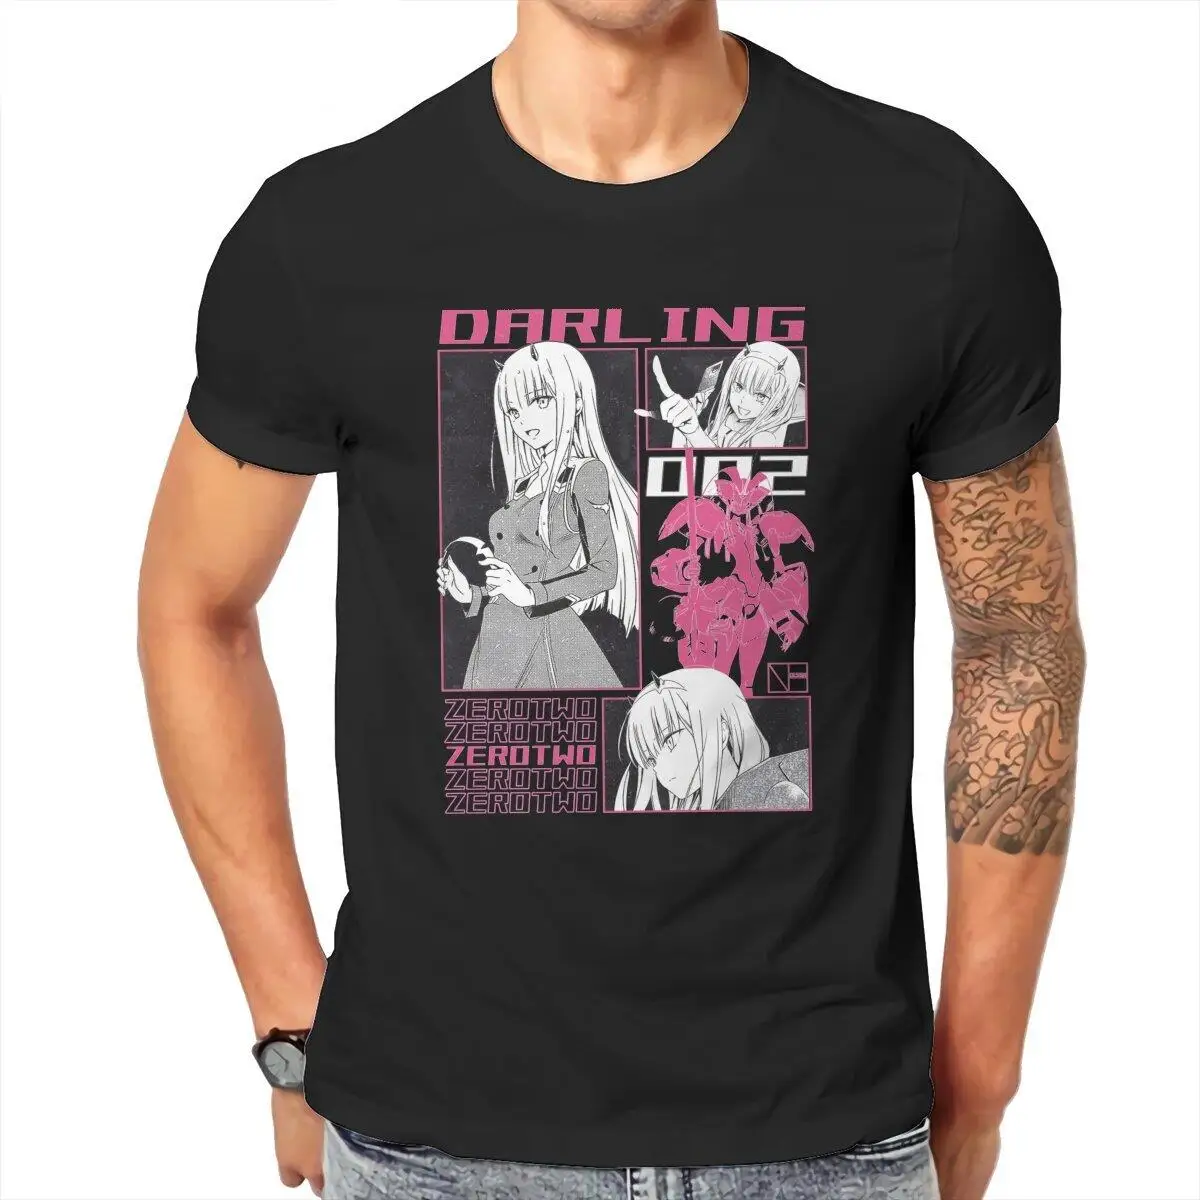 Japanese Anime Darling In The Franxx Men T Shirts Kawaii Girl Zero Two Humorous Tee Shirt T-Shirts 100% Cotton Gift Idea Clothes